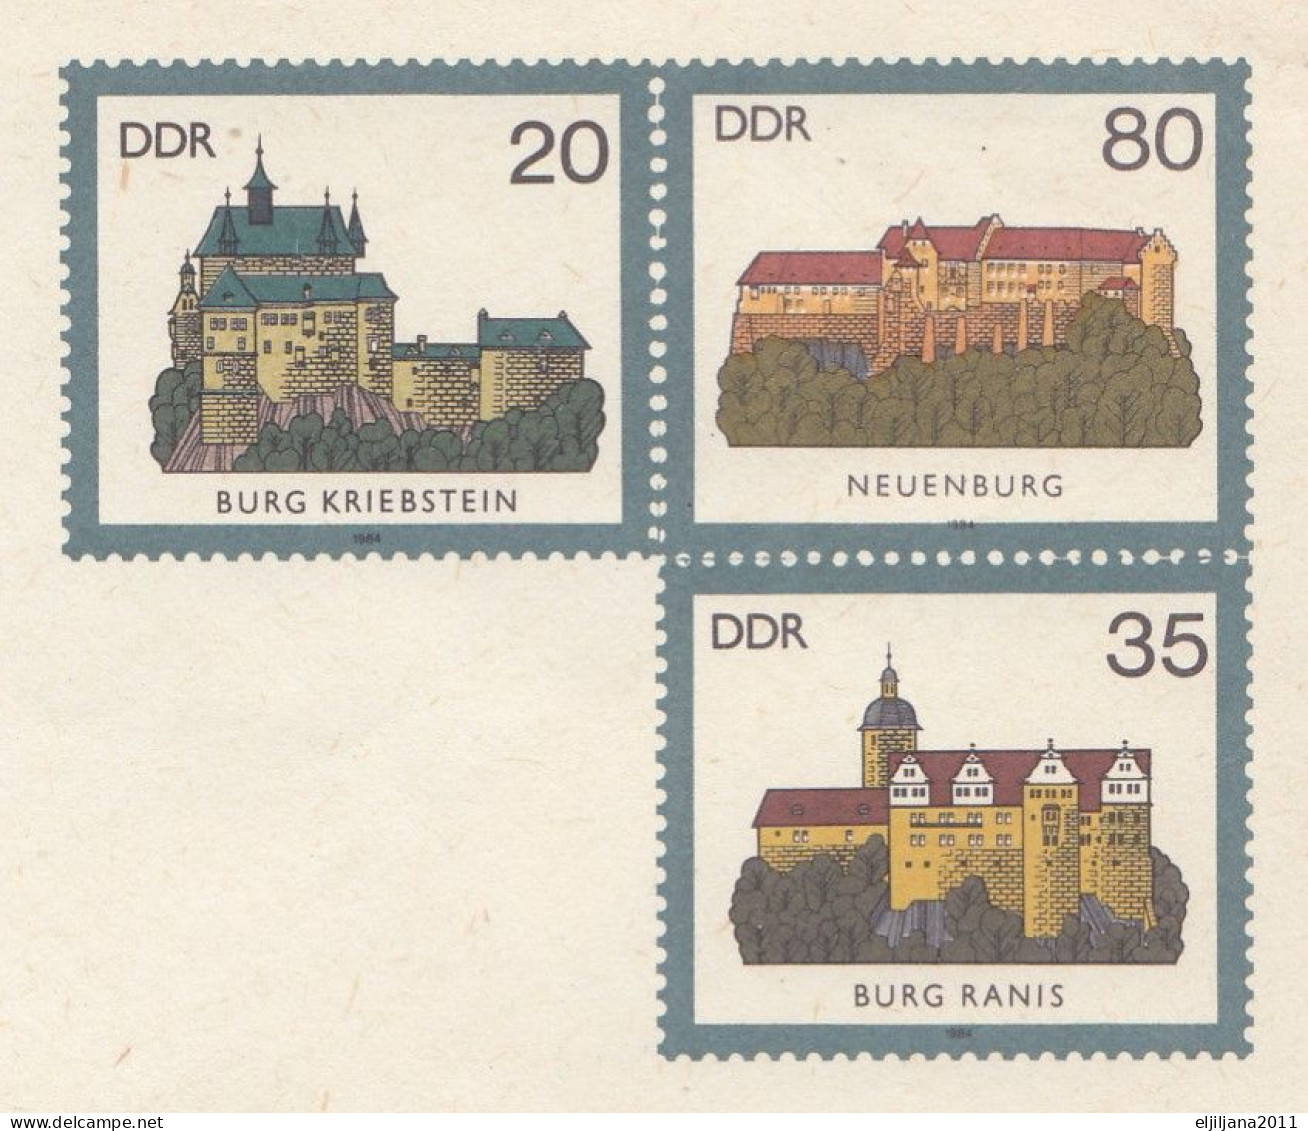 ⁕ Germany DDR 1984 ⁕ "Burgen Der DDR" / Postal Stationery ⁕ 3v Unused Cover FDC Ausgabetag / WERMSDORF - Enveloppes - Neuves